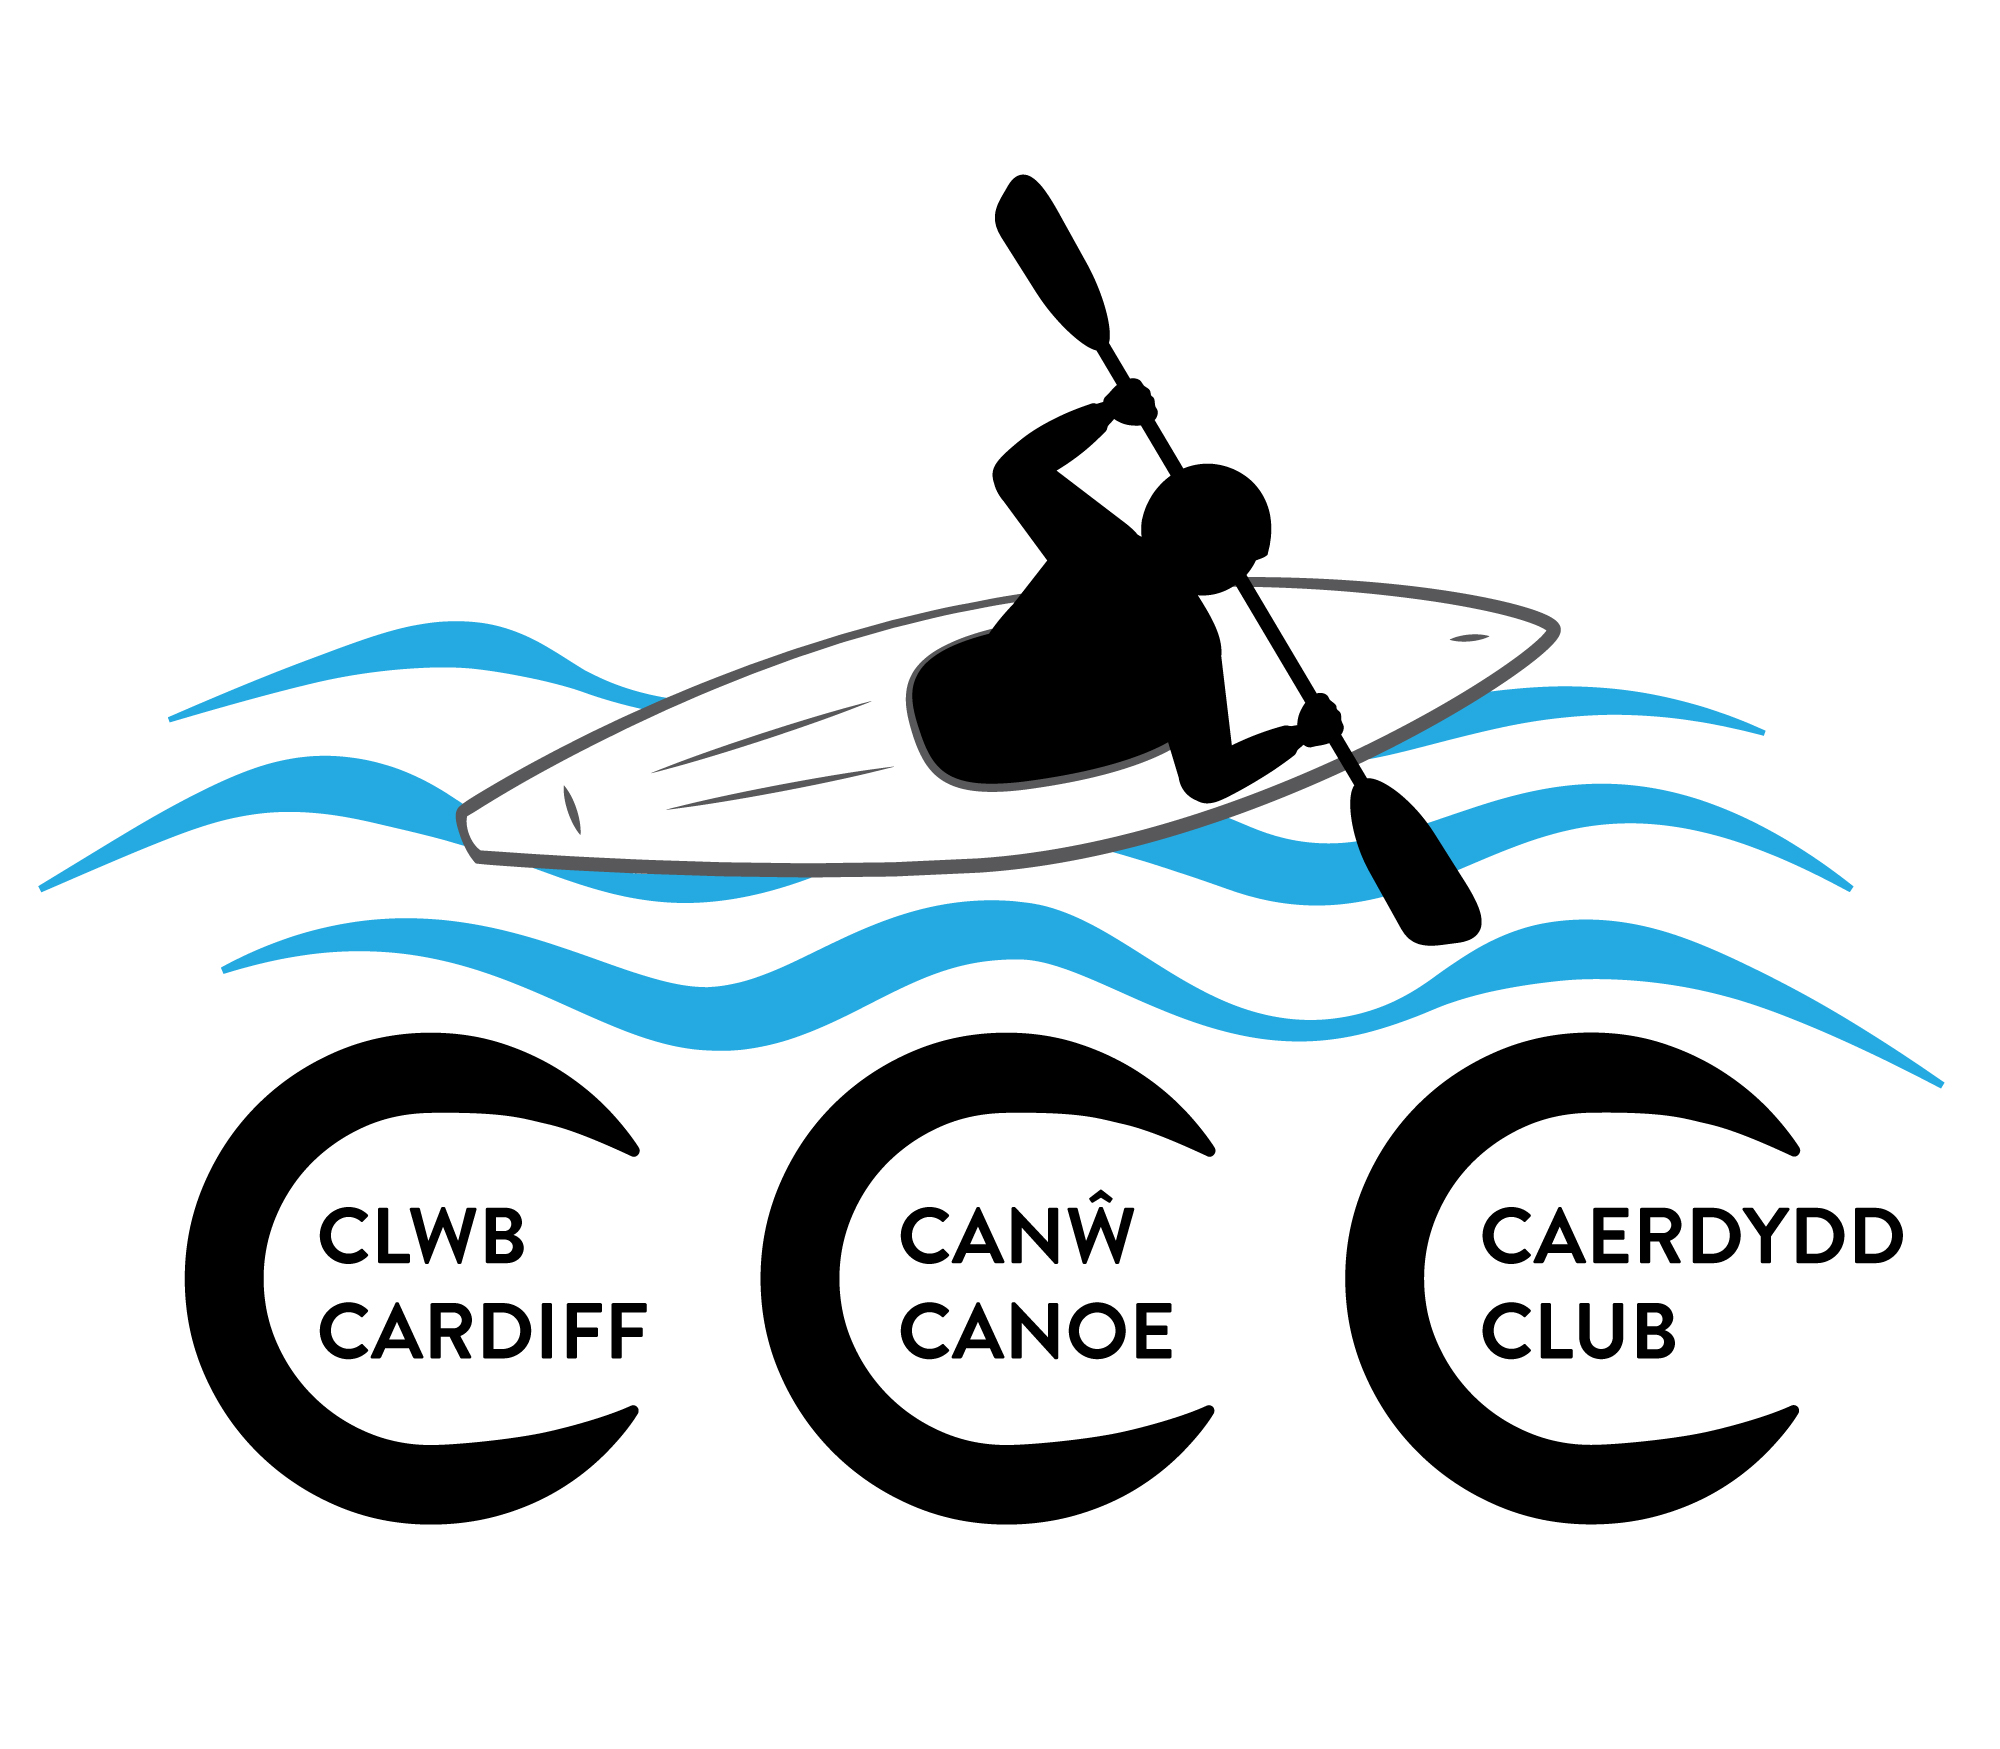 Cardiff Canoe Club